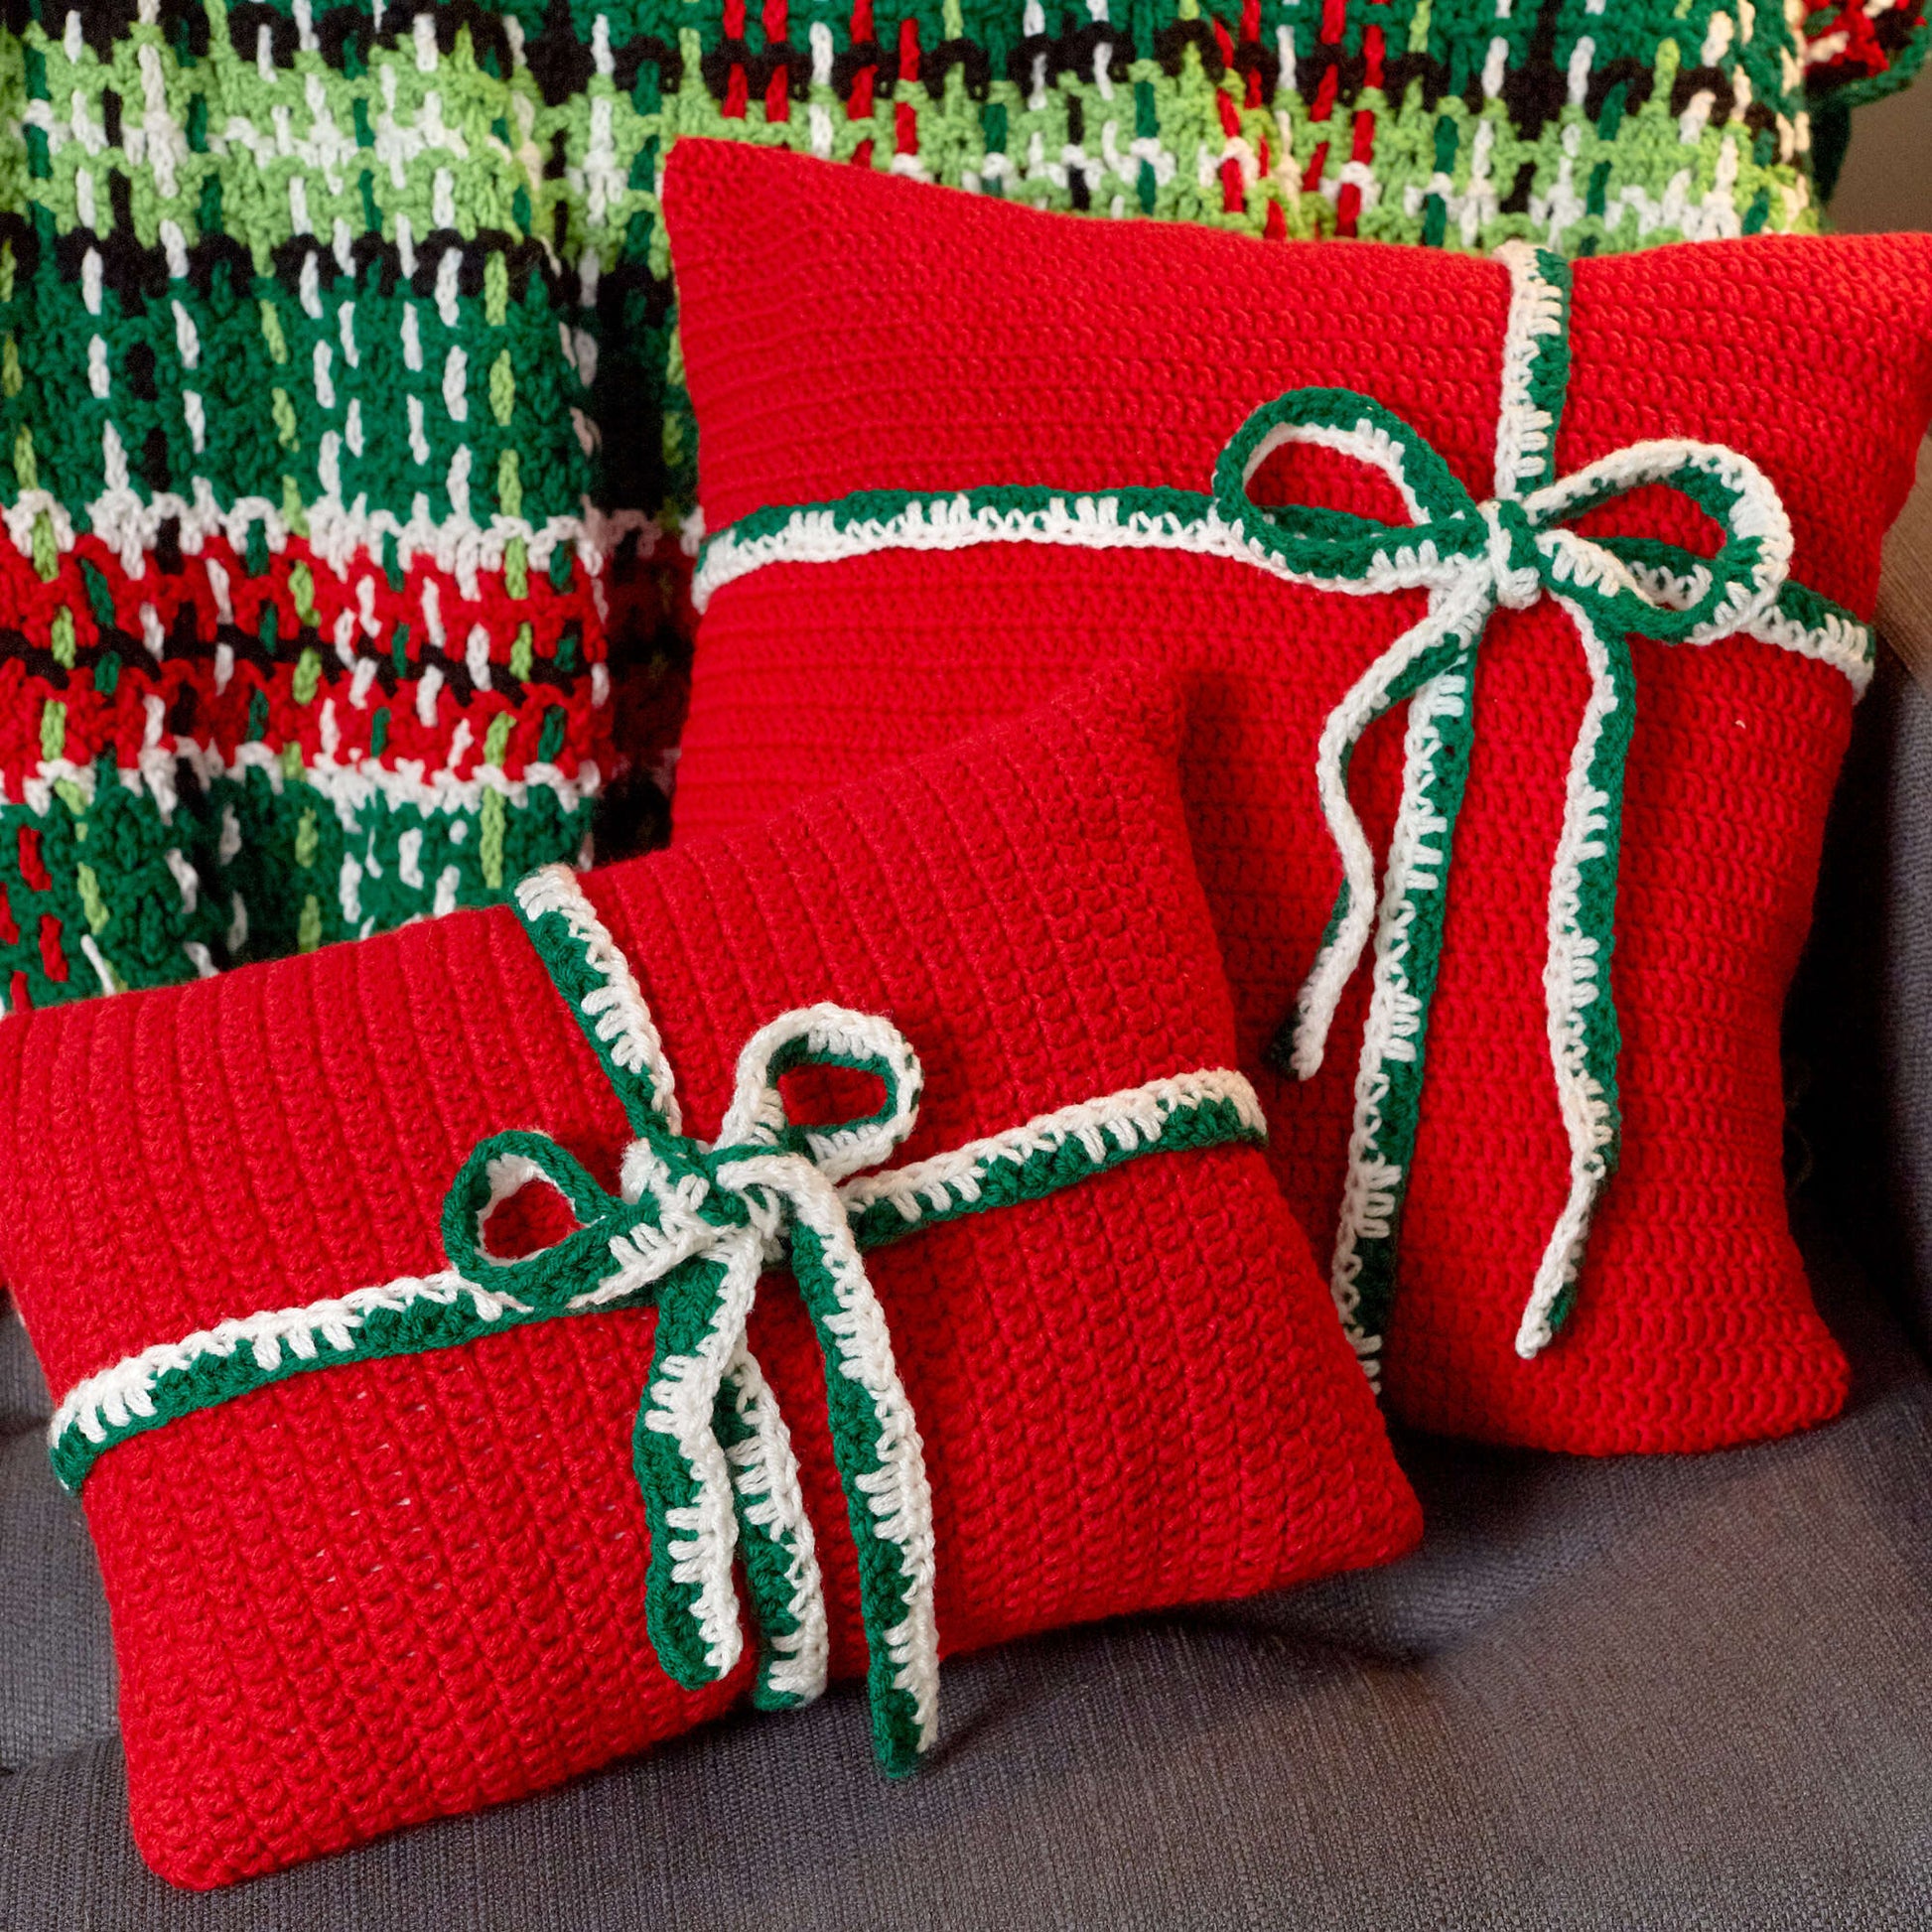 Free Red Heart Gift Pillows Crochet Pattern